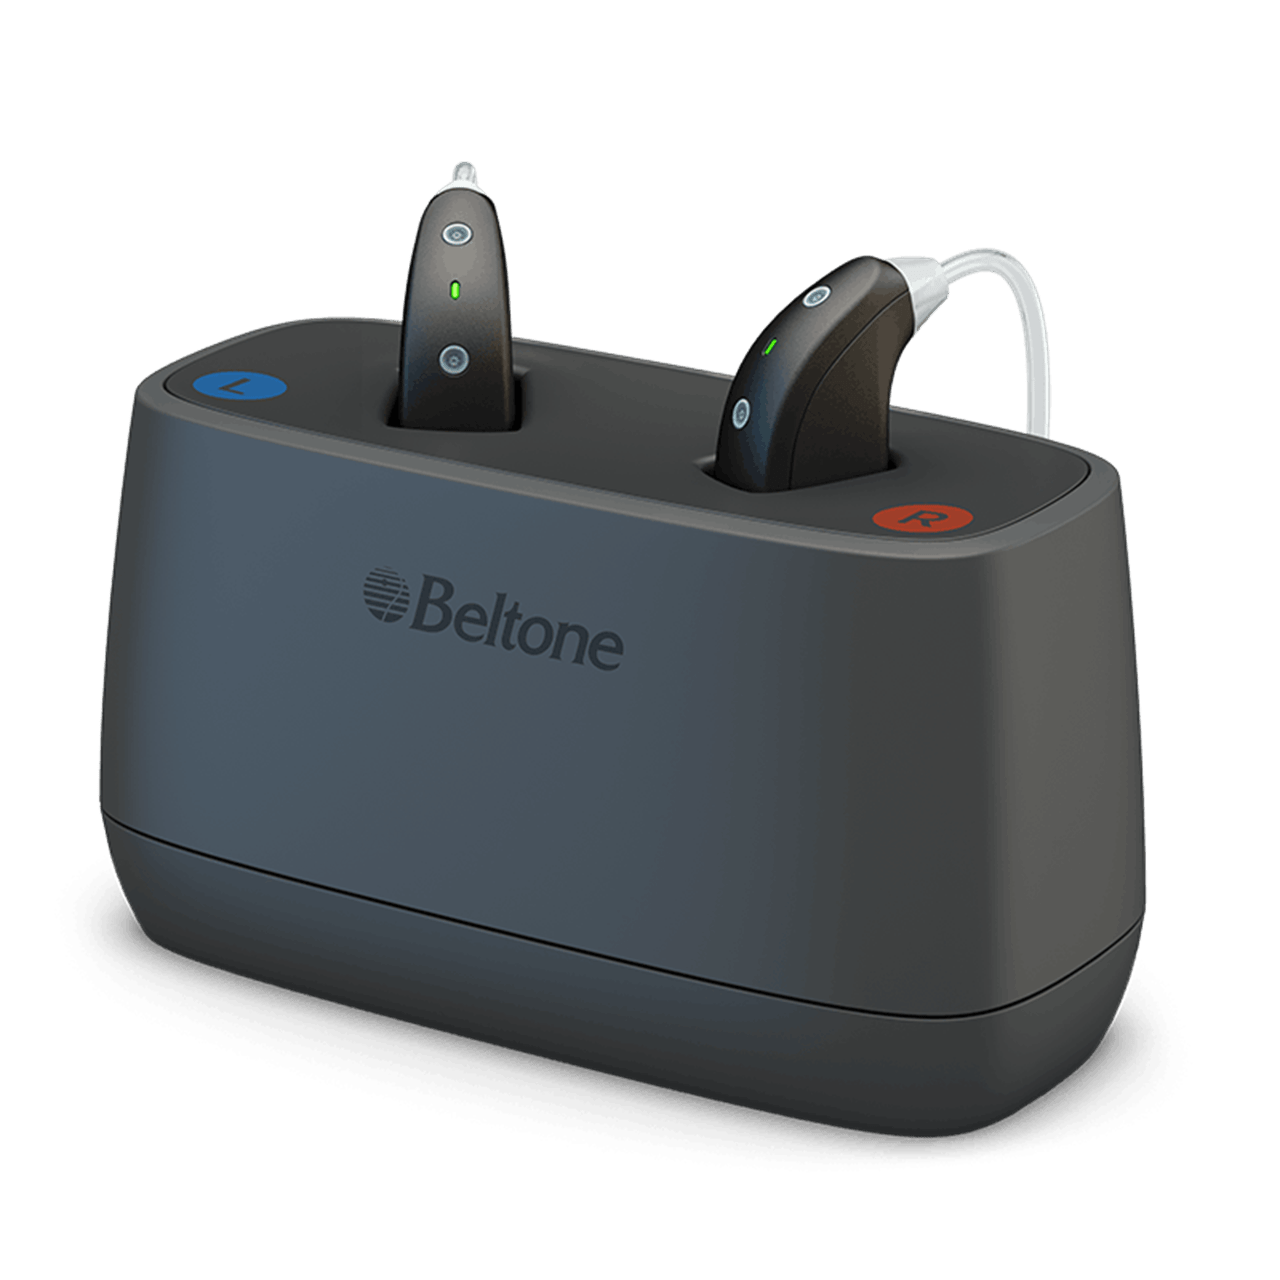 Beltone Imagine Hearing Aid